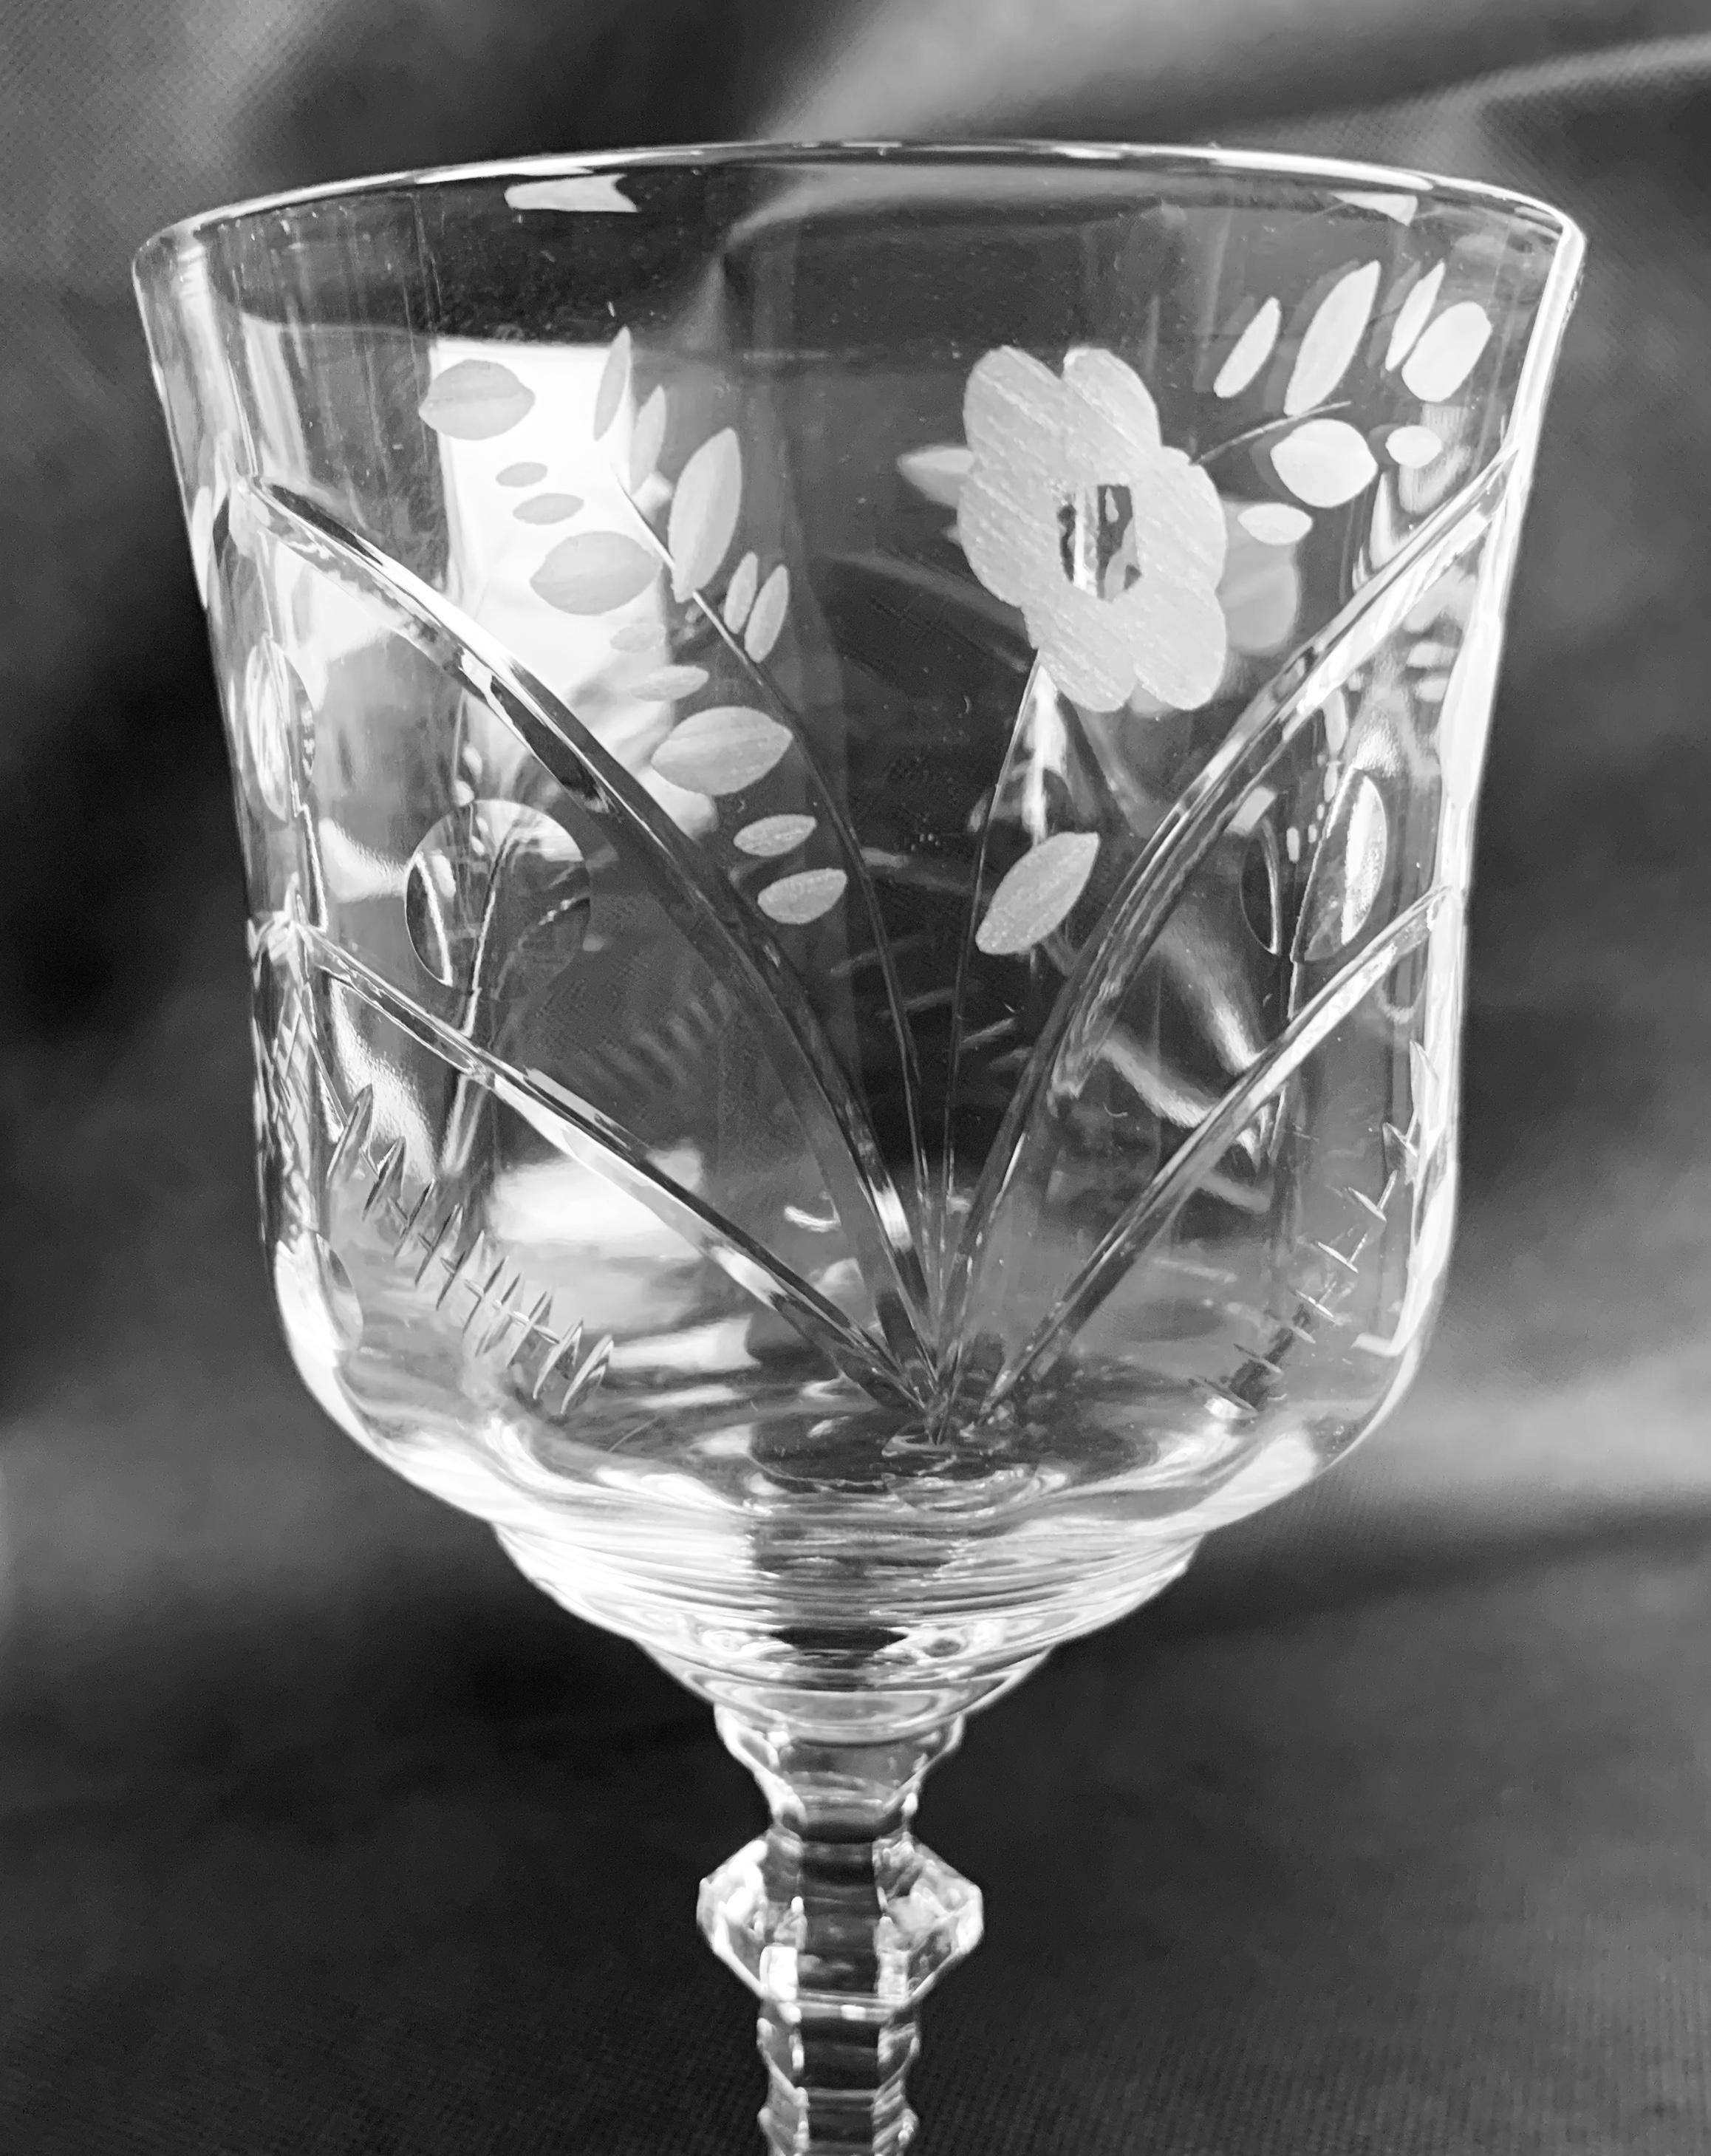 Mid-20th Century Rock Sharpe's Wine Glasses in the 